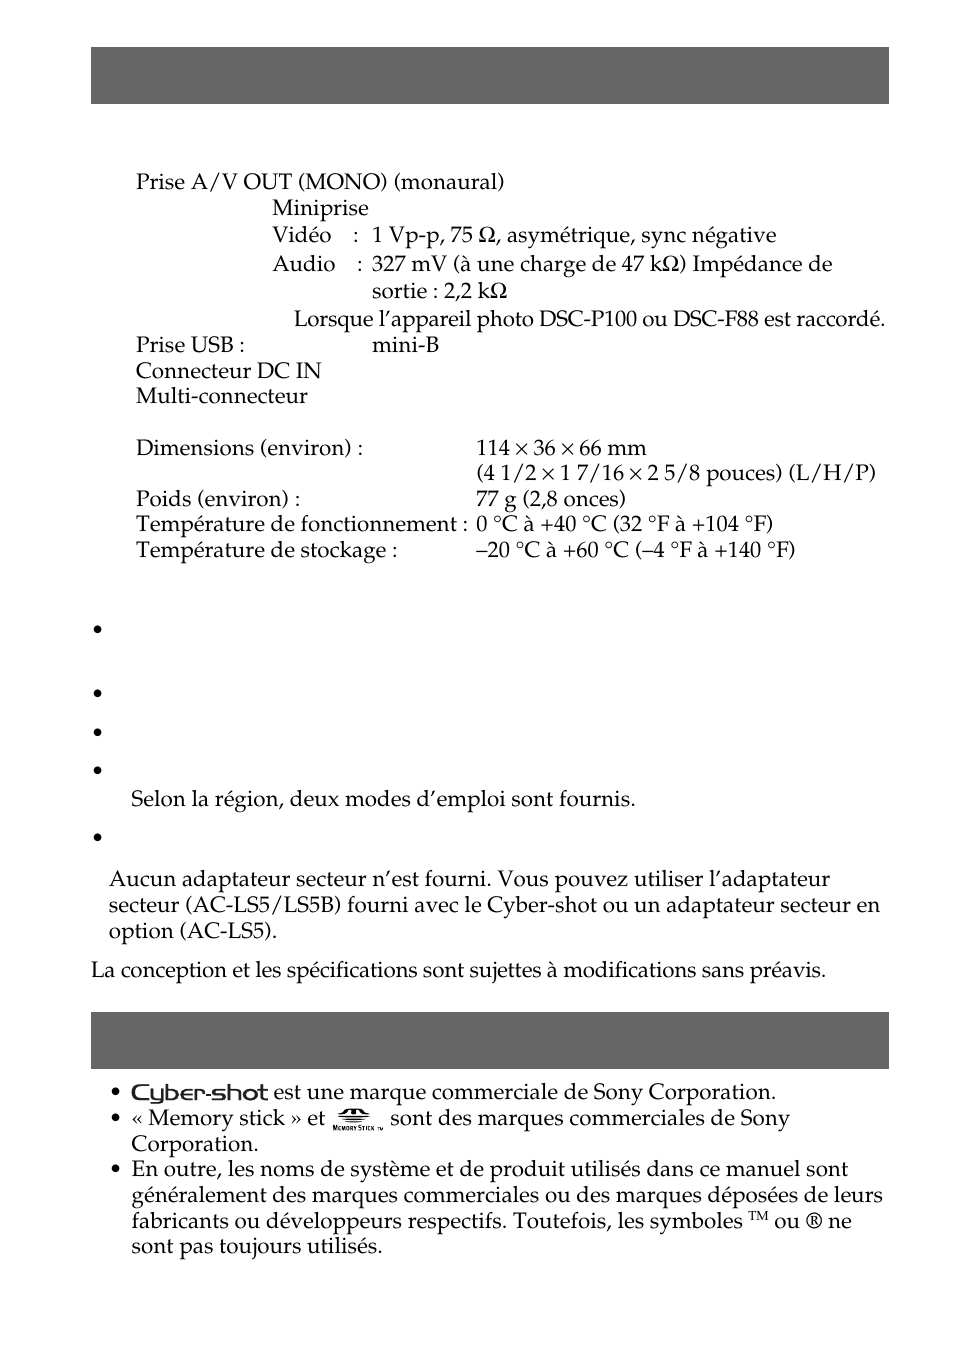 Spécifications, Marques commerciales | Sony CSS-FEB Manuel d'utilisation | Page 48 / 52